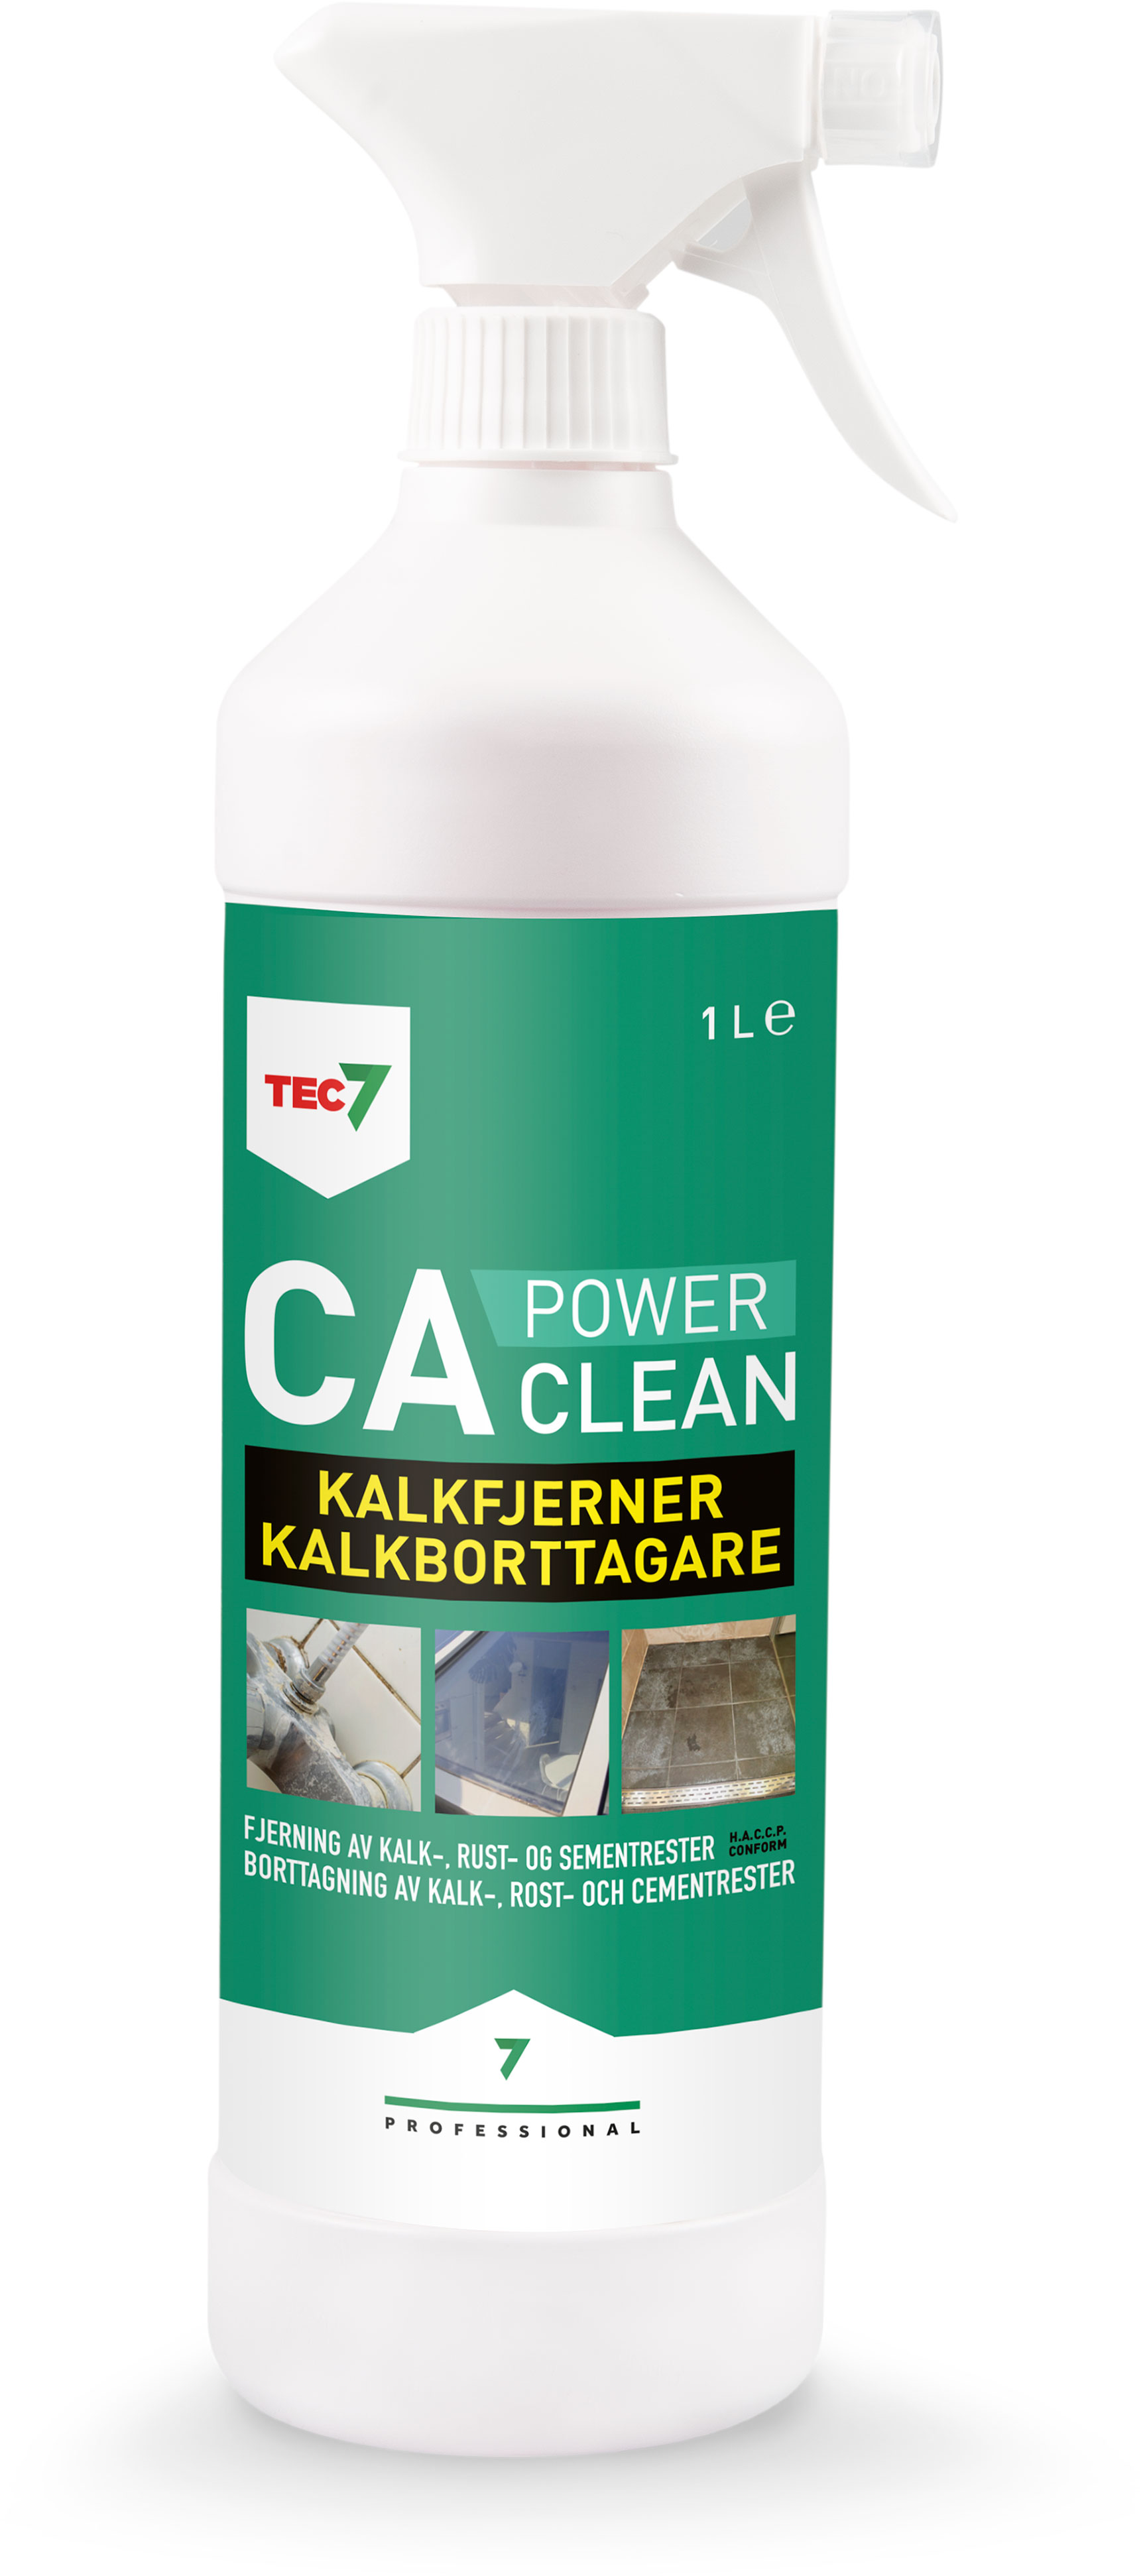 Tec7 CA Clean 1 liter sprayflaske